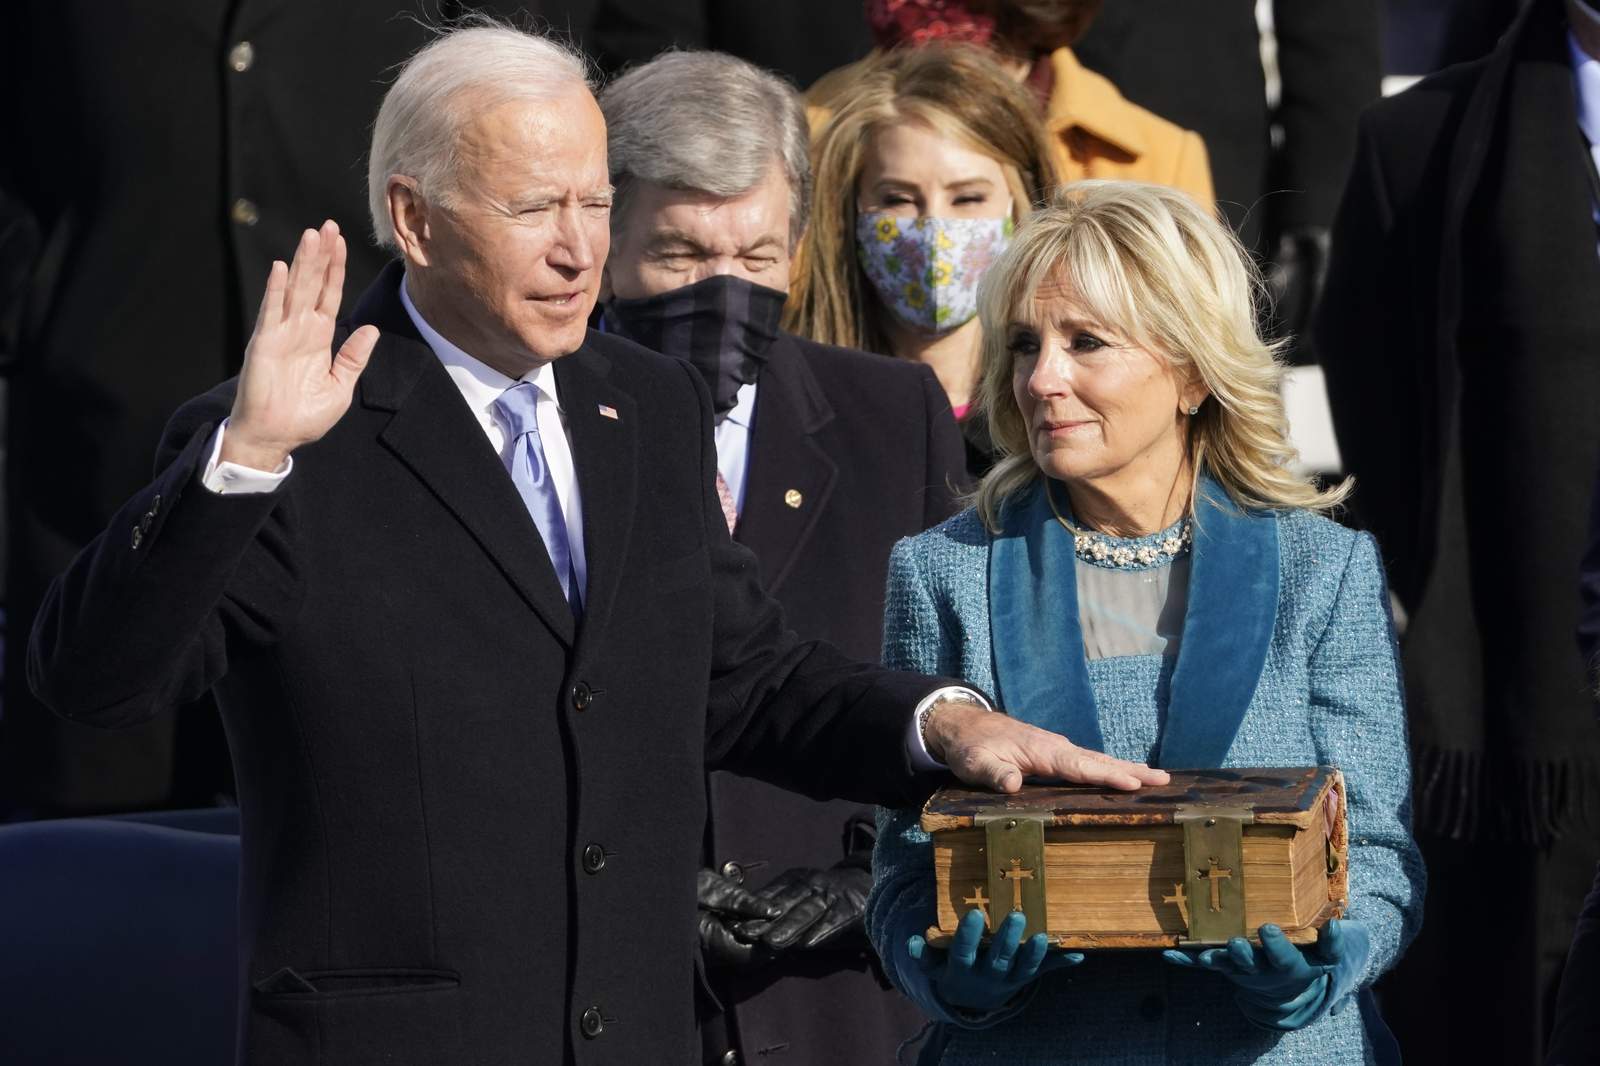 Inauguration recap: Joe Biden sworn in as 46th U.S. president